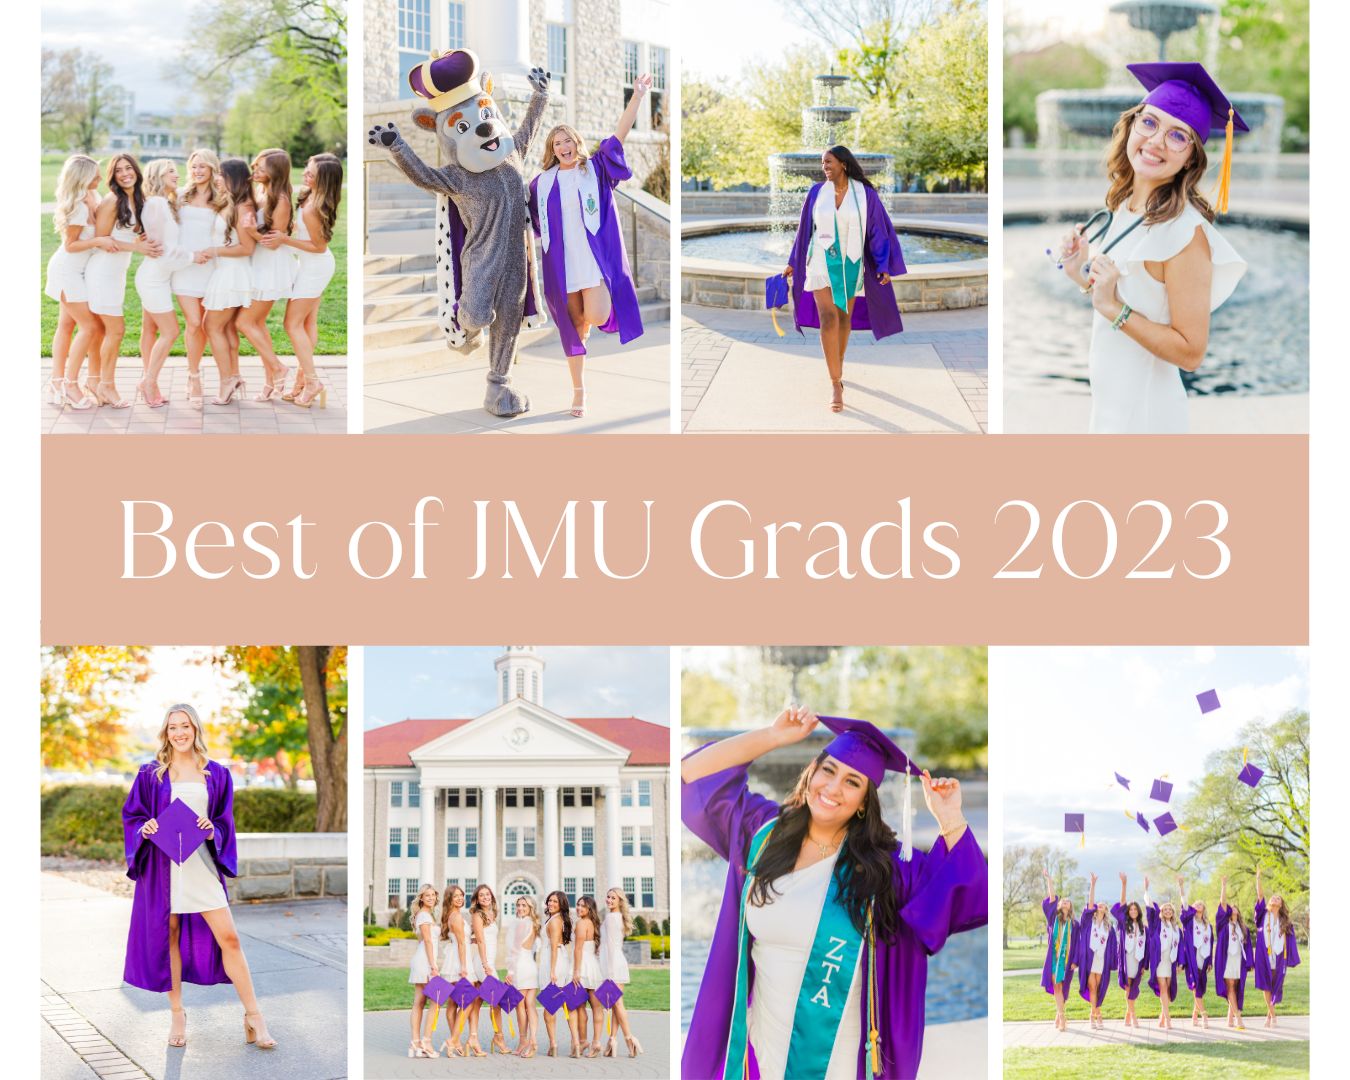 Best of JMU Grads 2023